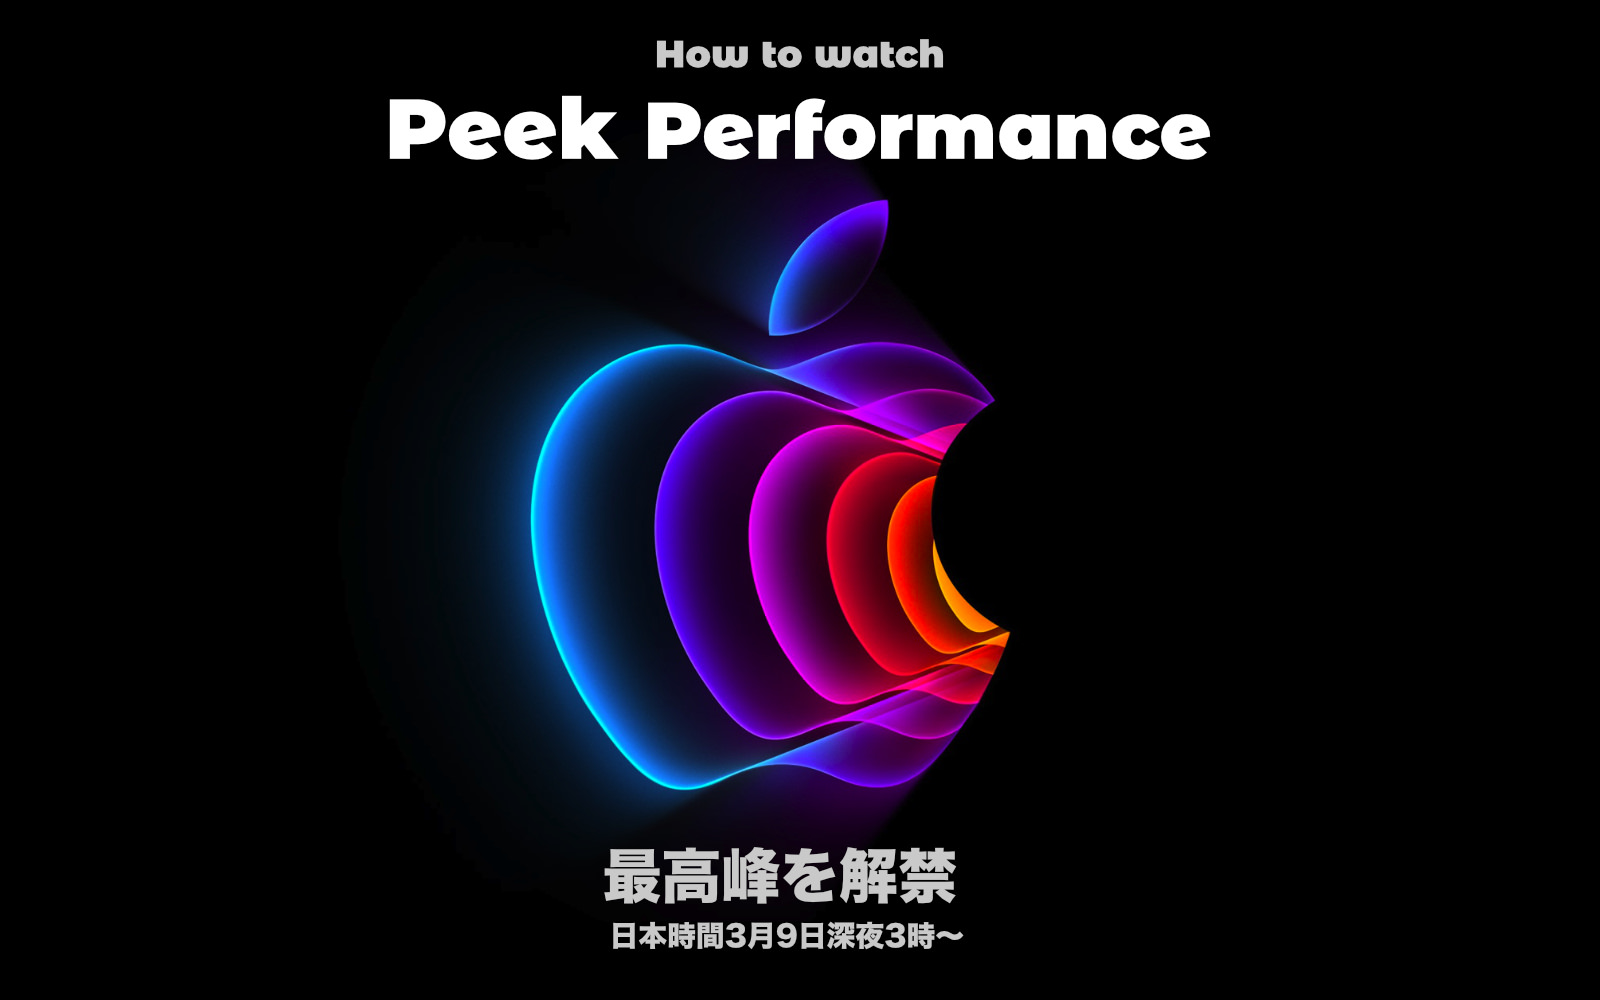 How to watch peek performance